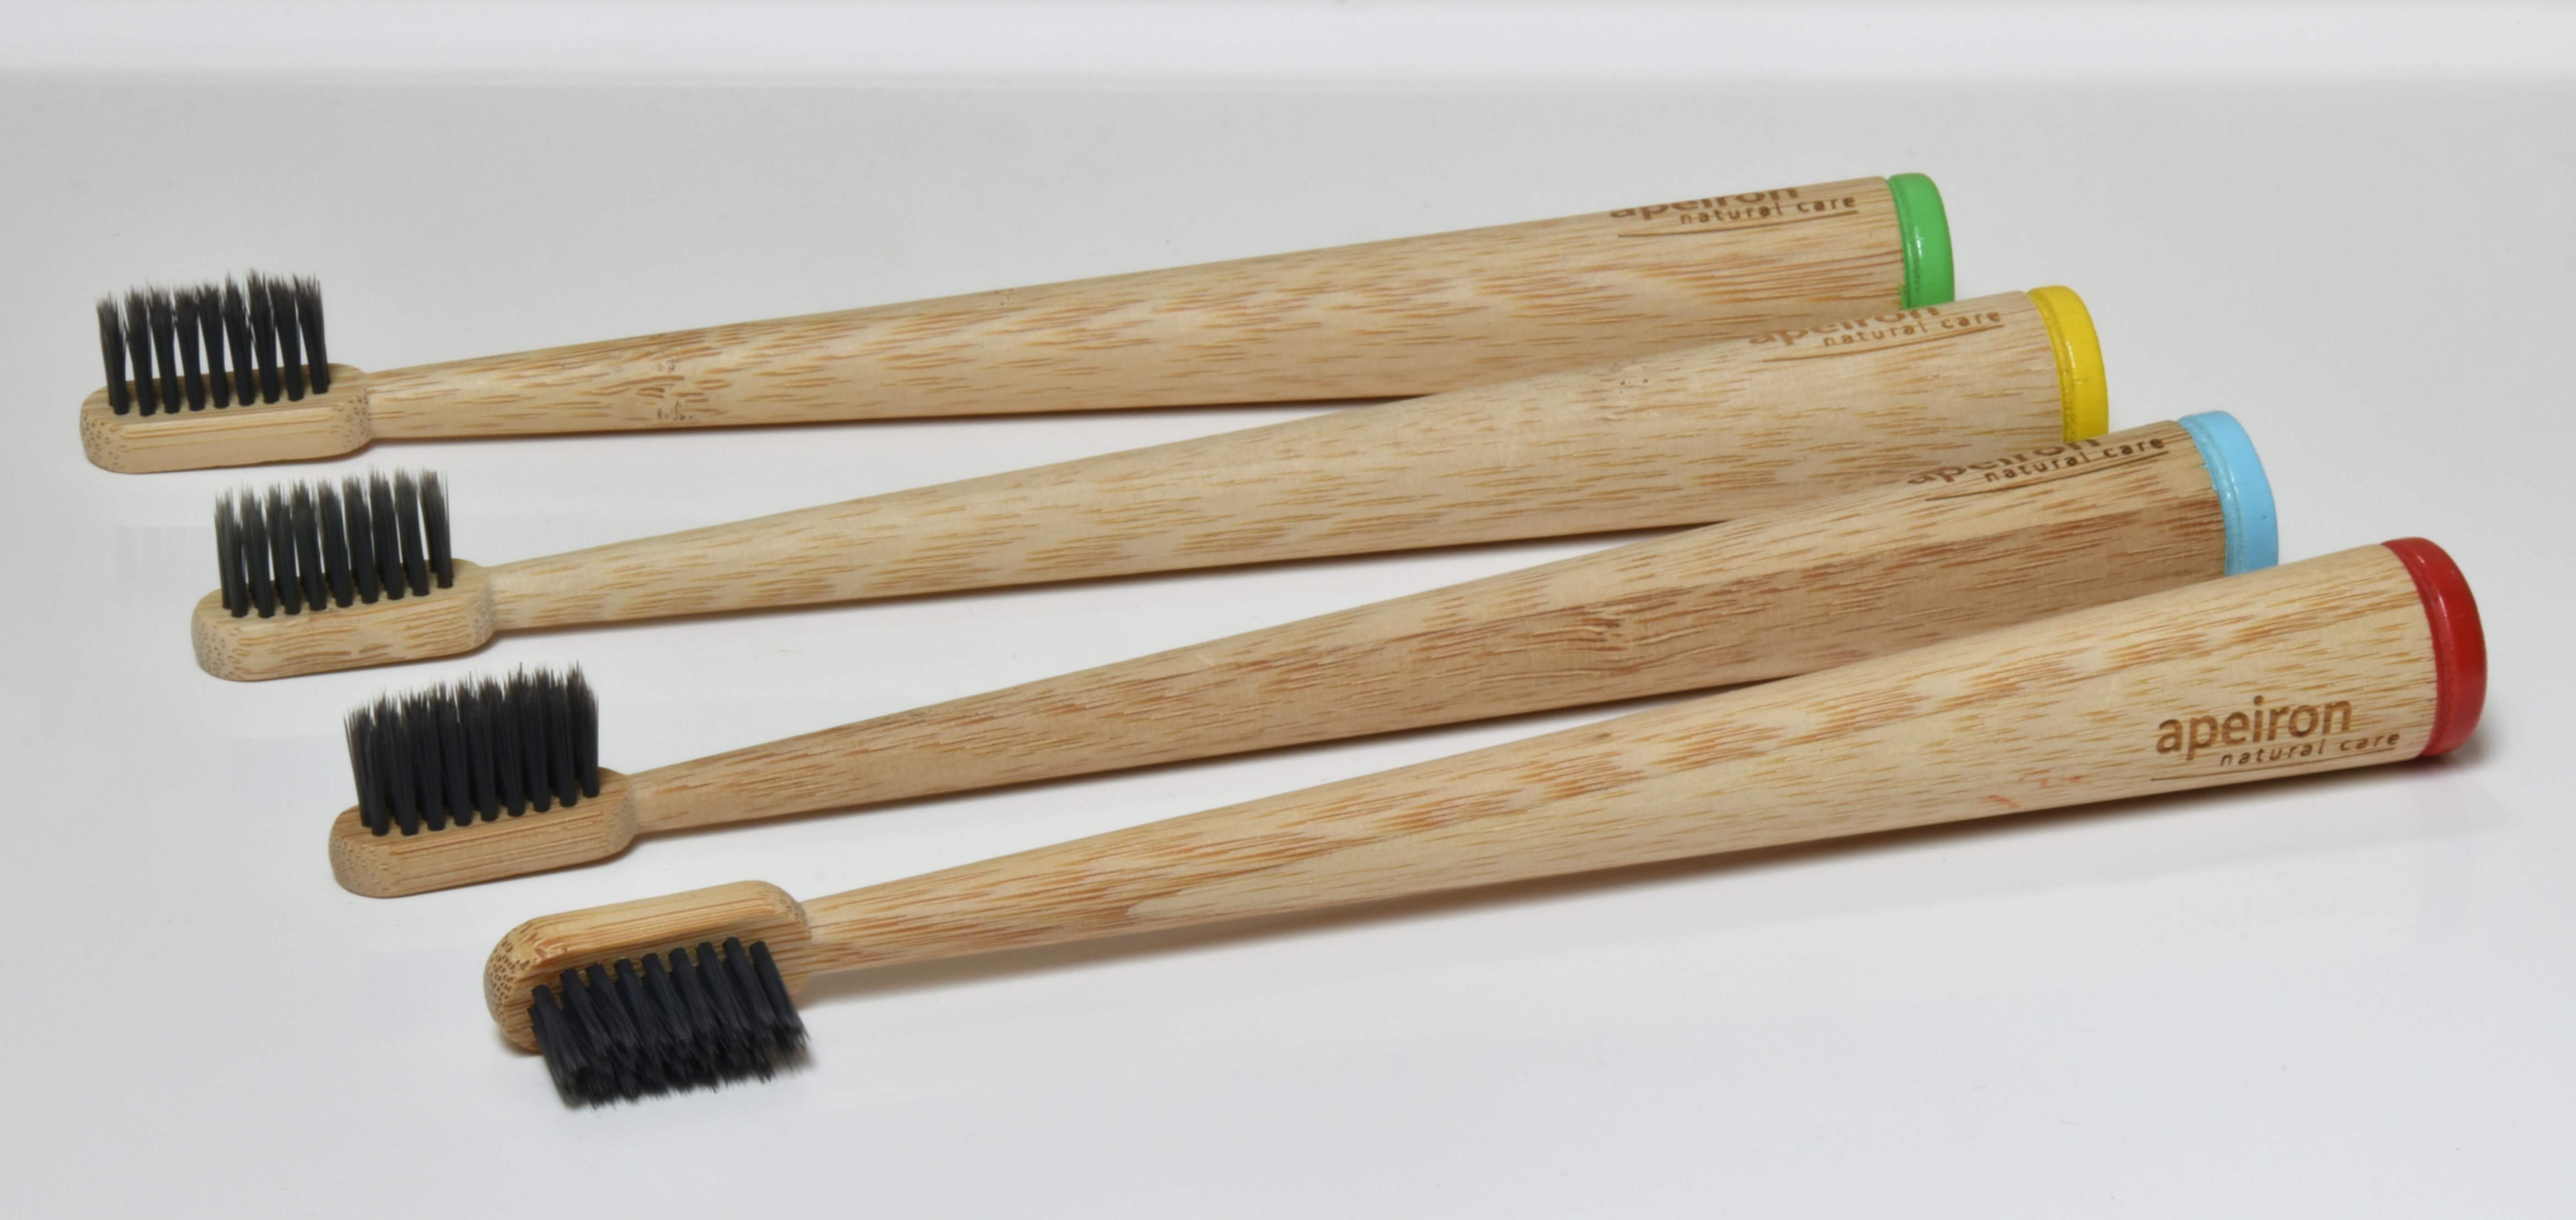 Bambus-Zahnbürste, natur-farbig markiert, Apeiron